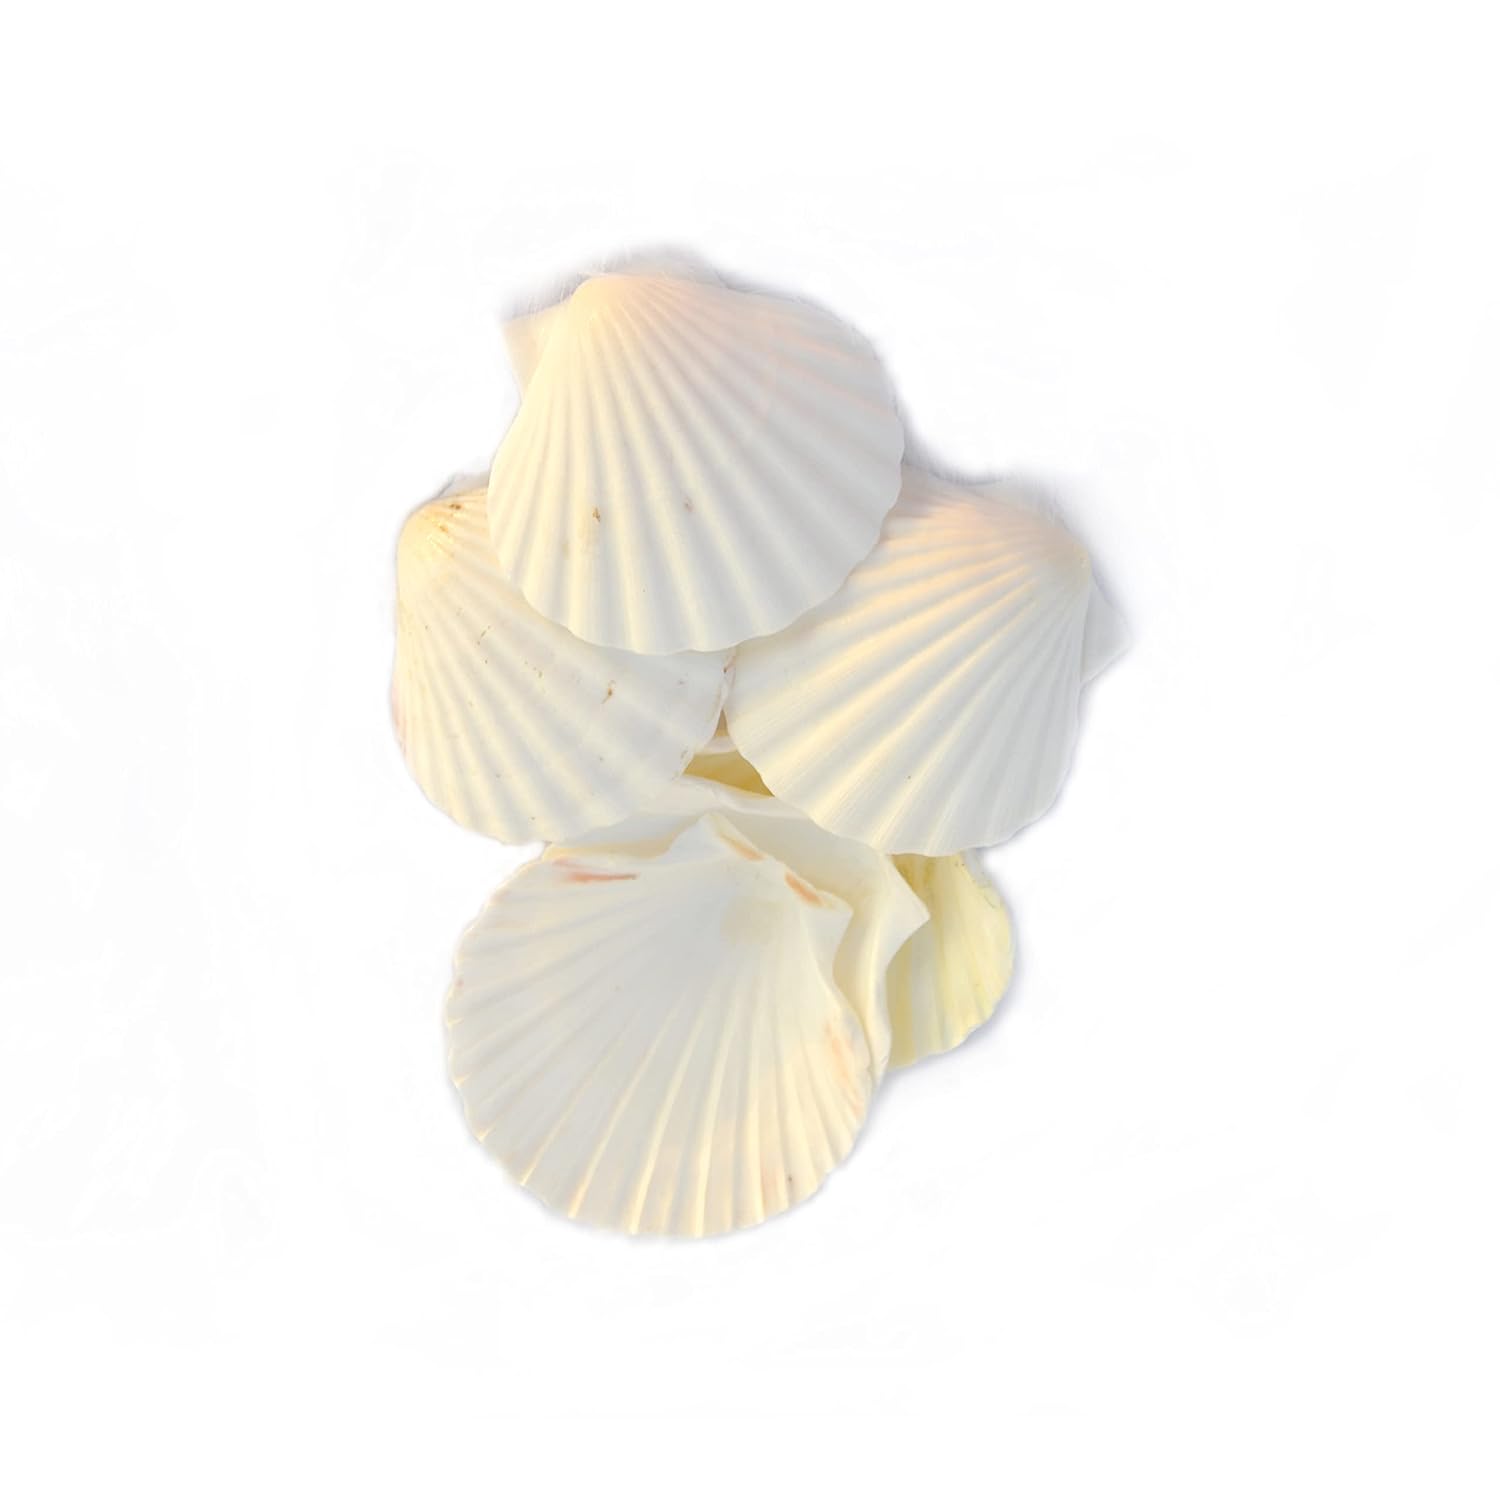 Mitaksi Crafts Large Natural Baking Shells White Scallops, 4 - Inches, White Colour - 6 Shells